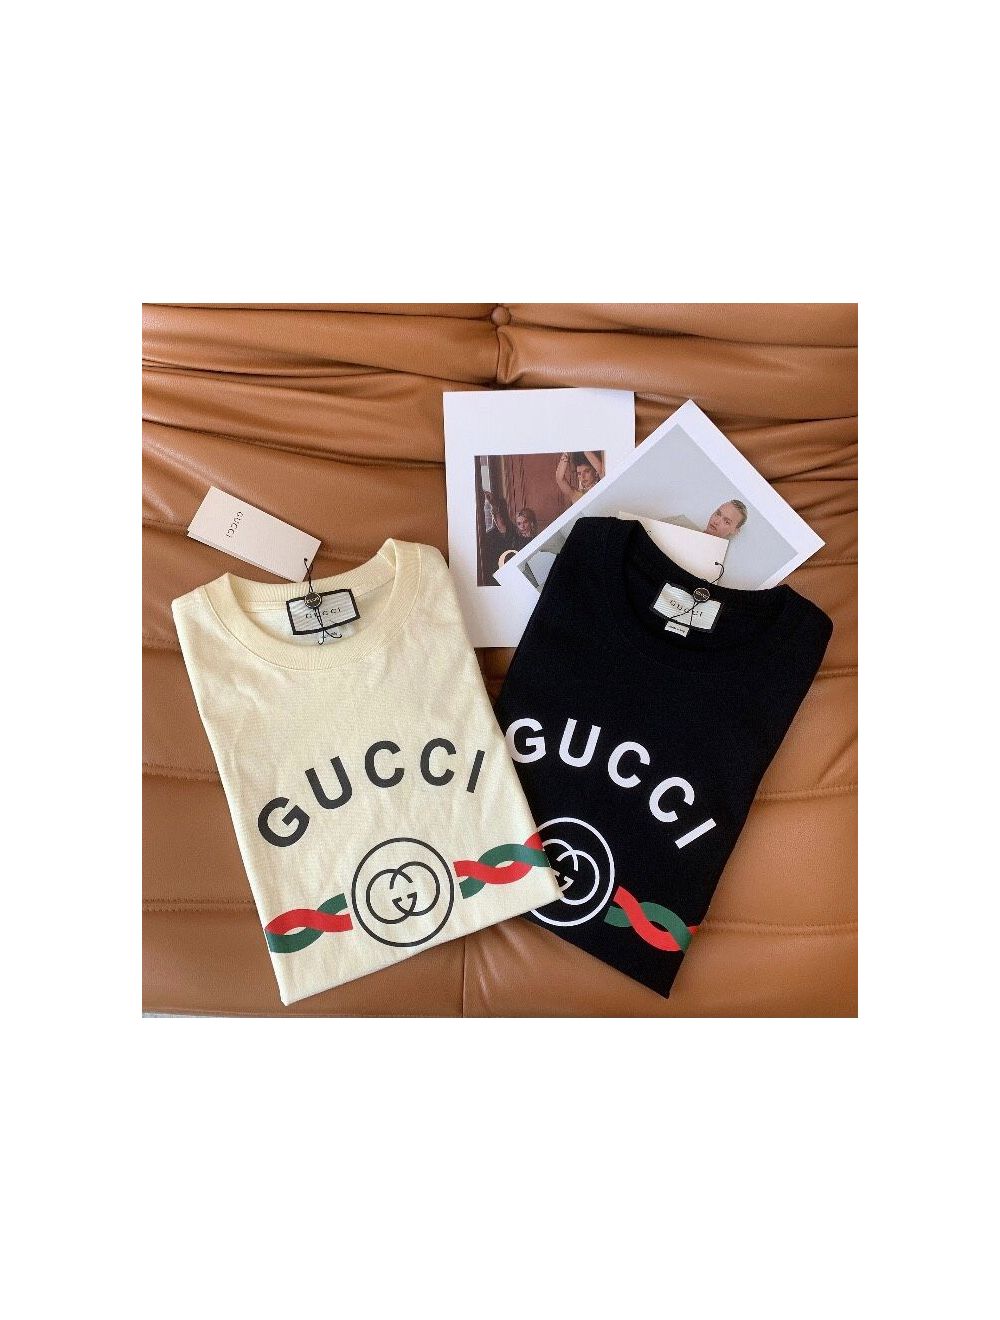 Gucci T-shirt Unisex - Gucci Firenze 1921 gghh4313031322